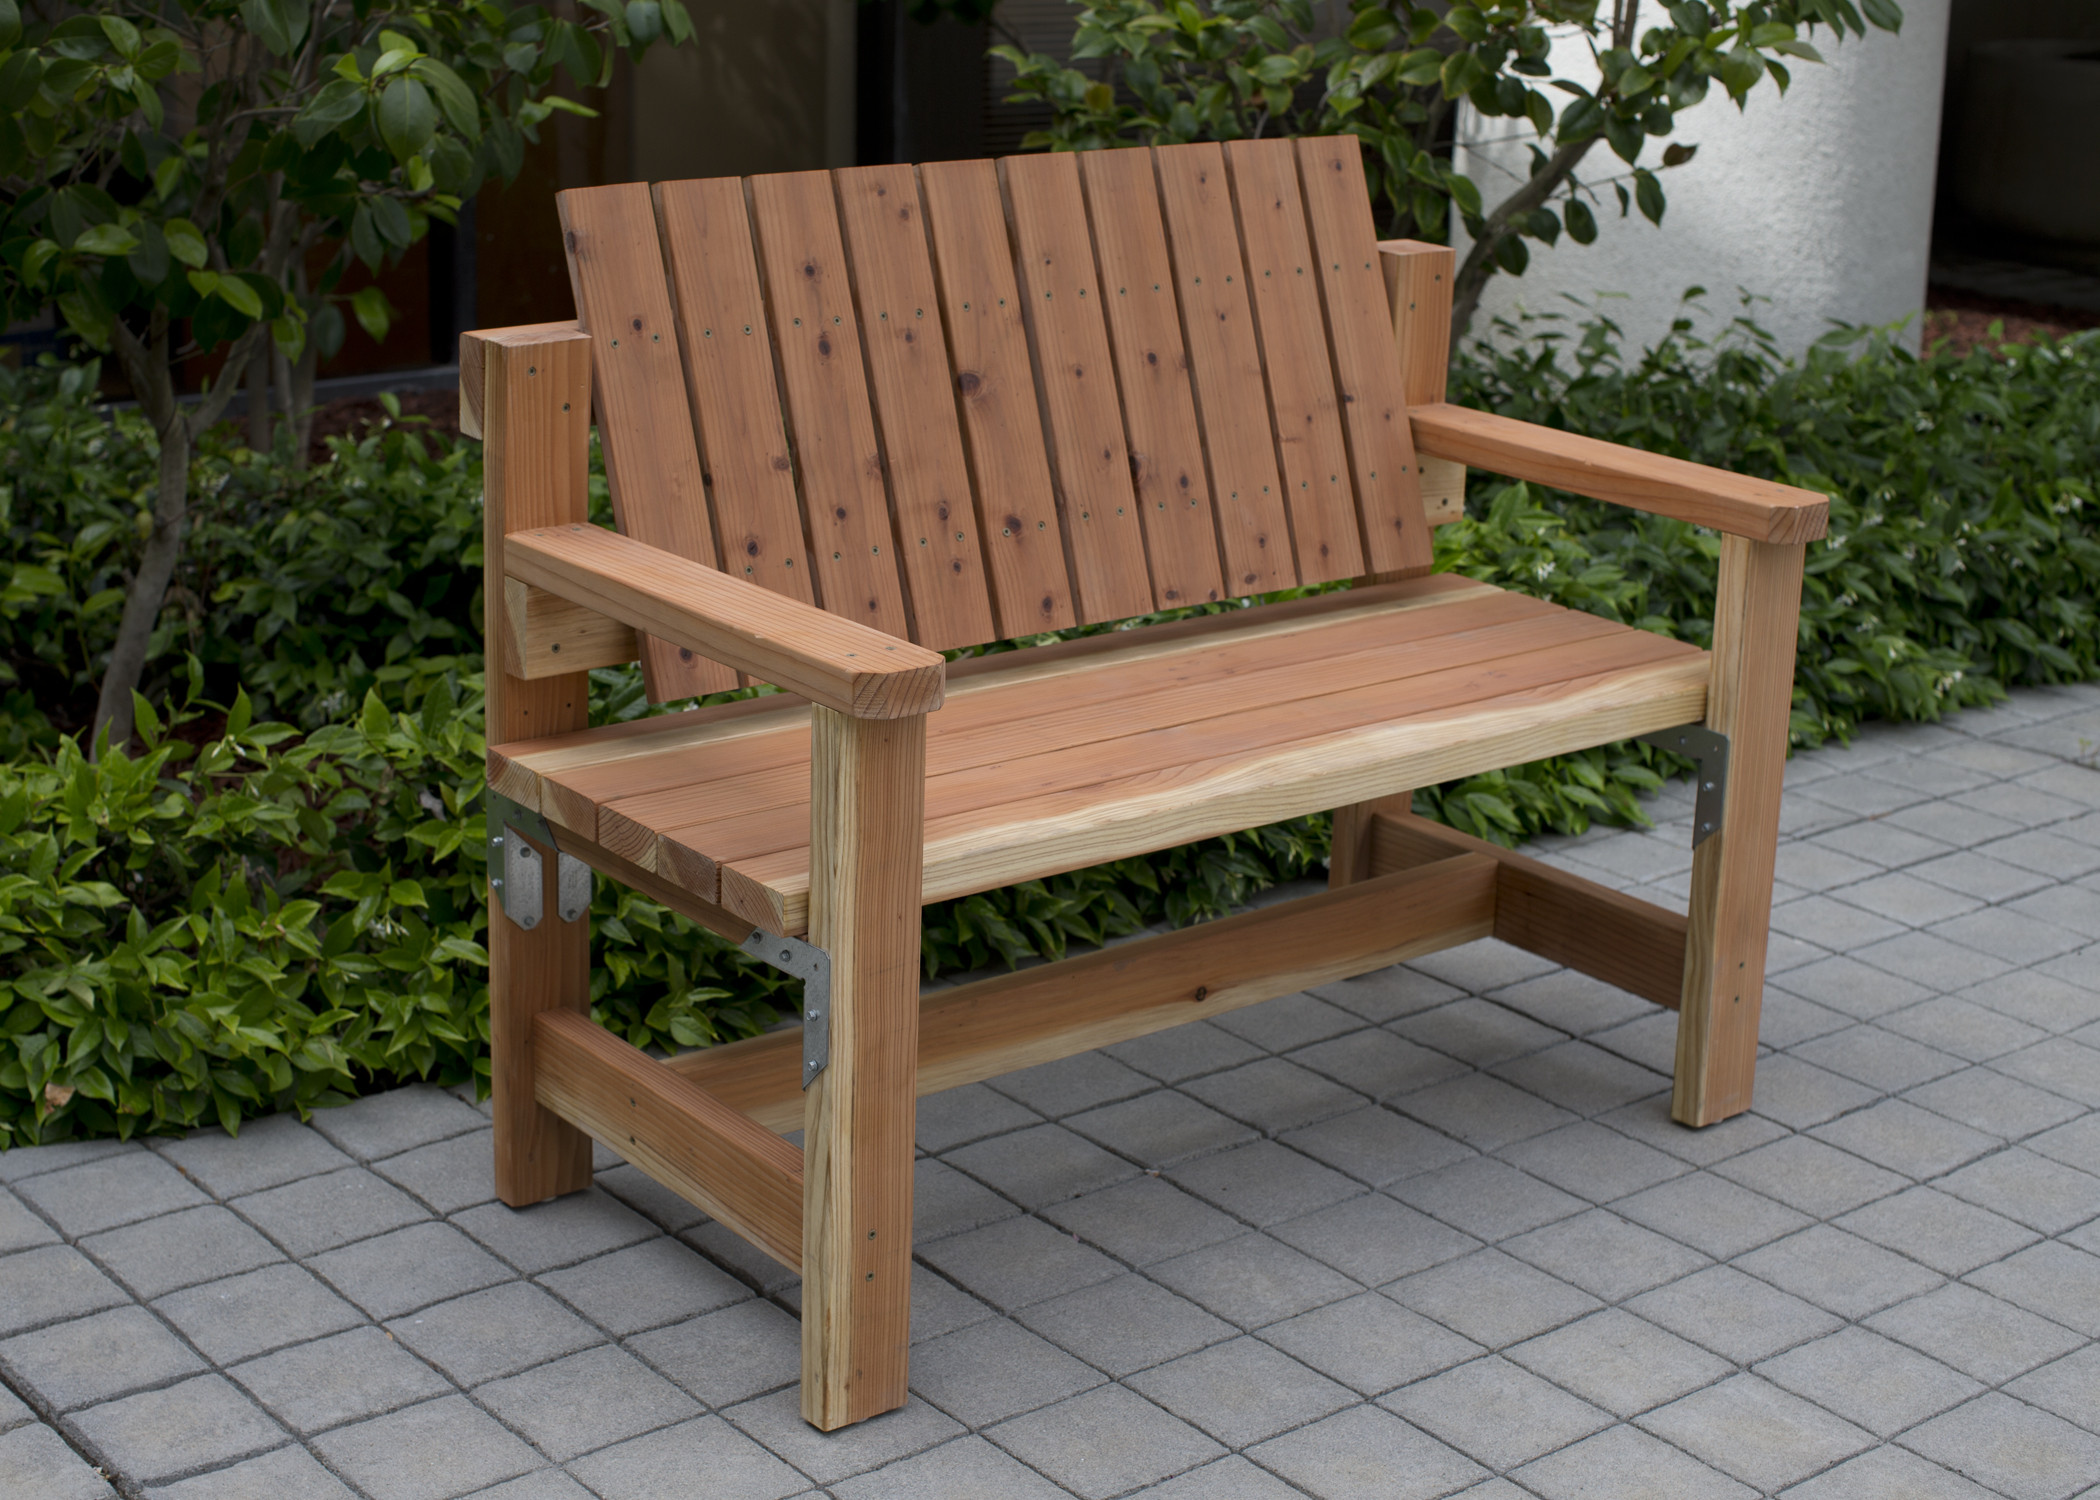 DIY Outdoor Wooden Bench
 DIY Garden Bench Part 1 DIY Done Right